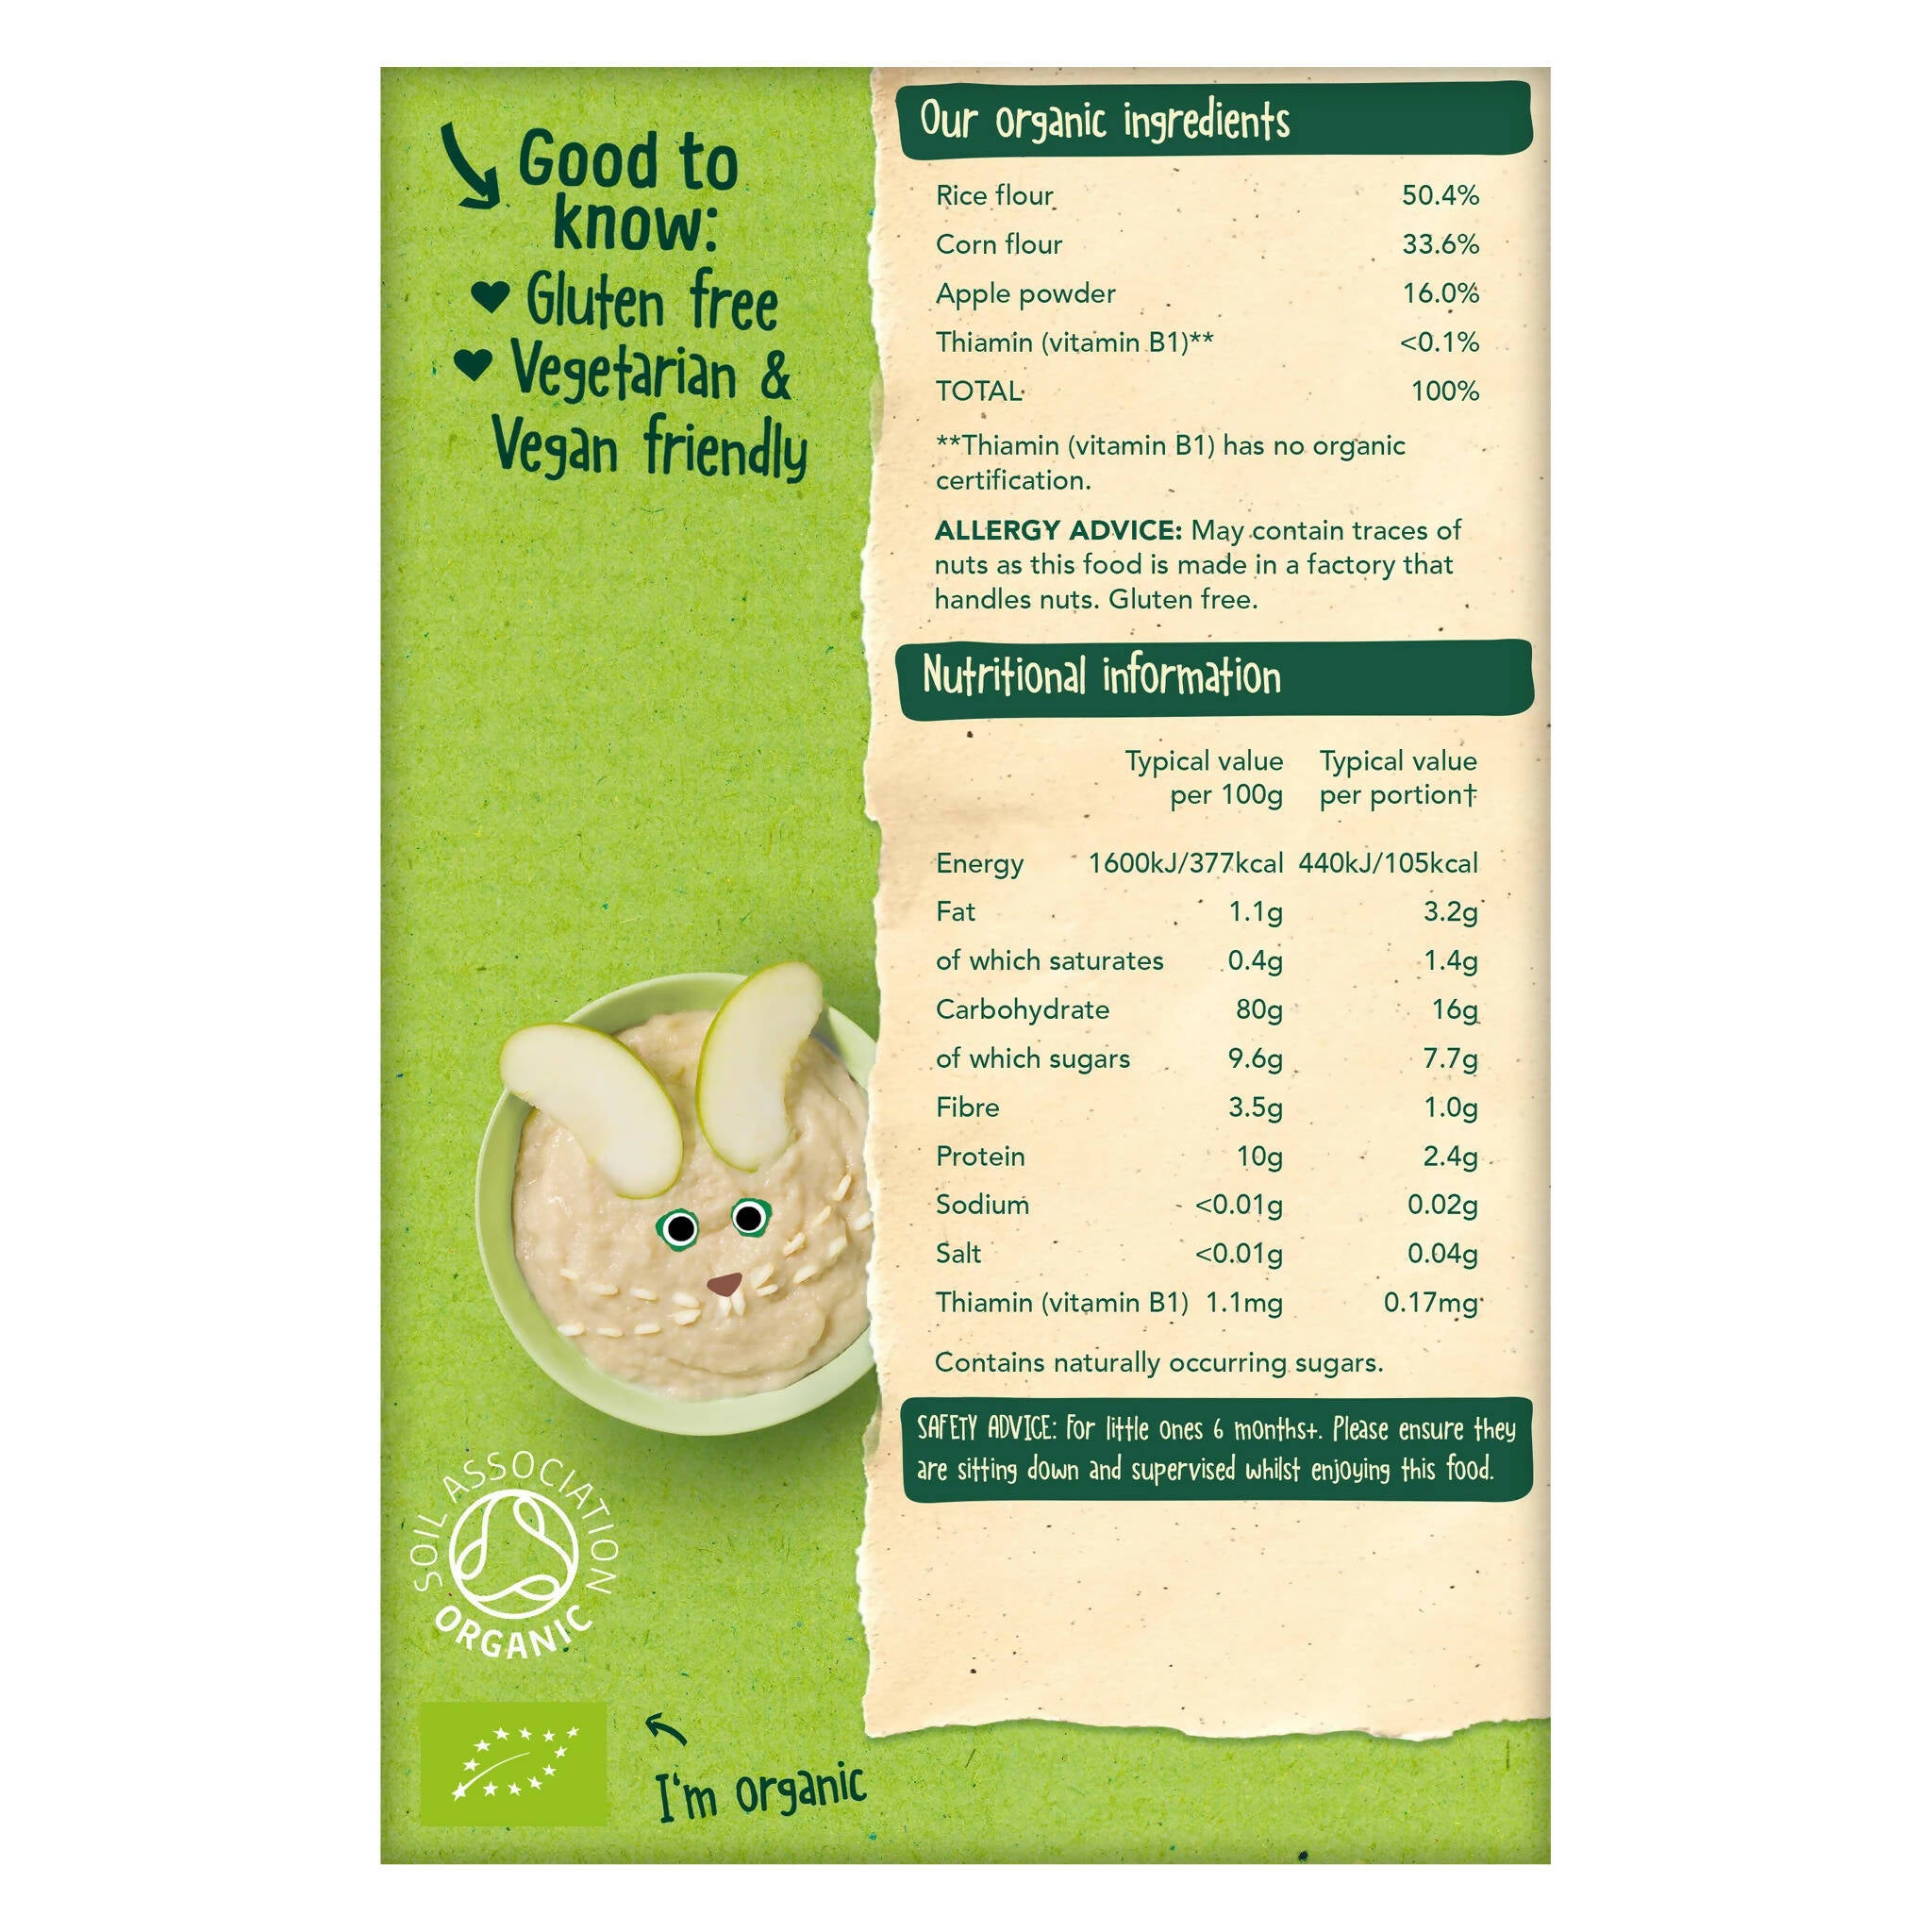 Organix Fruity Apple Porridge Organic baby foods McGrocer Direct   